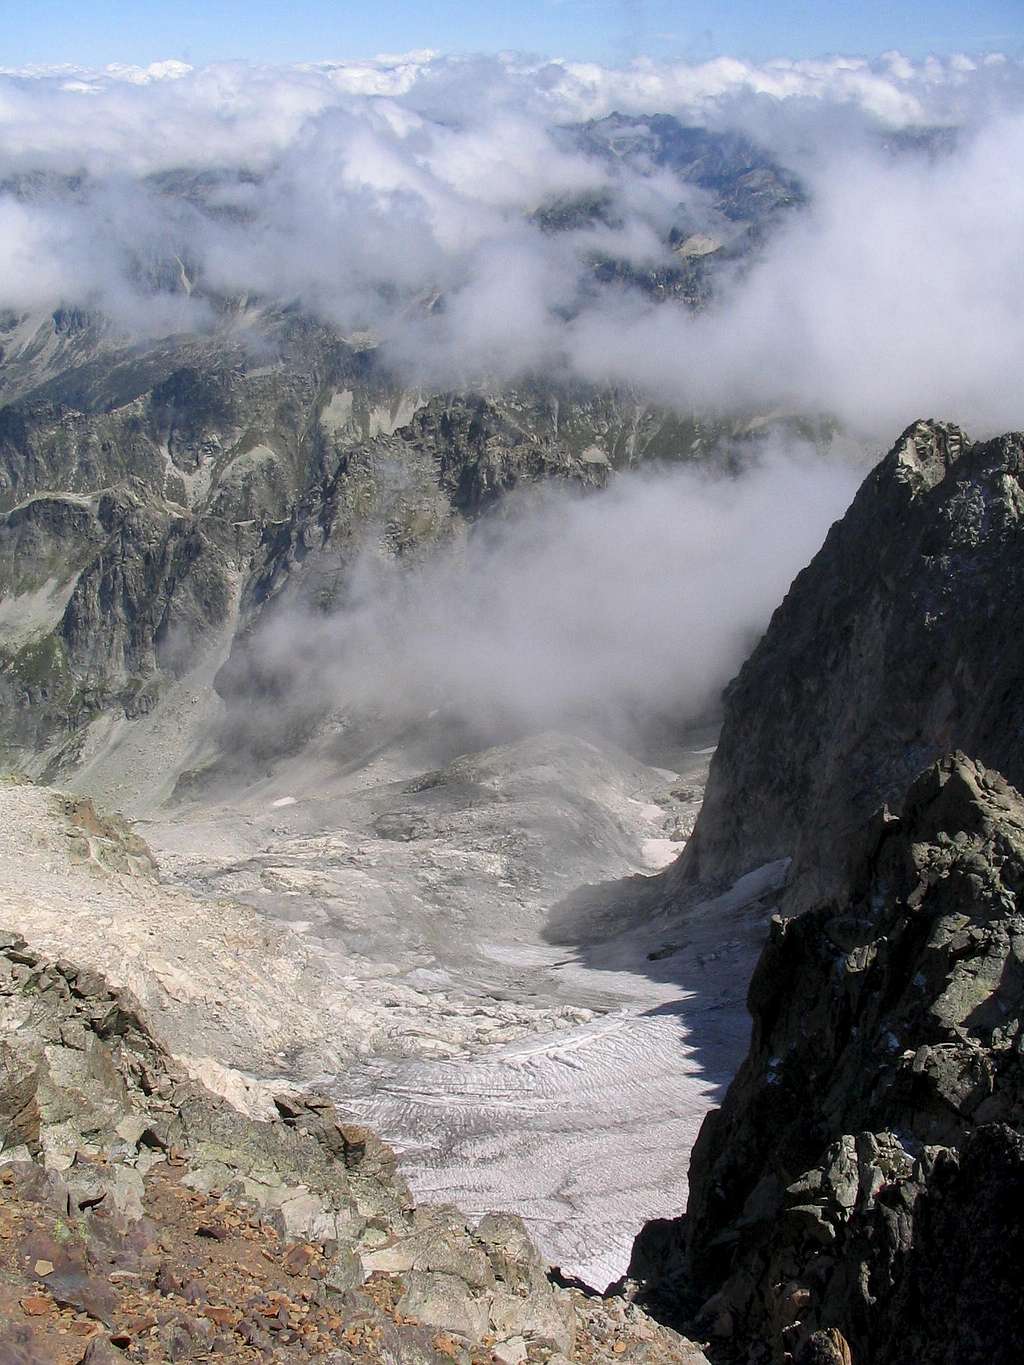 las néous glacier seen from top of Balaitous